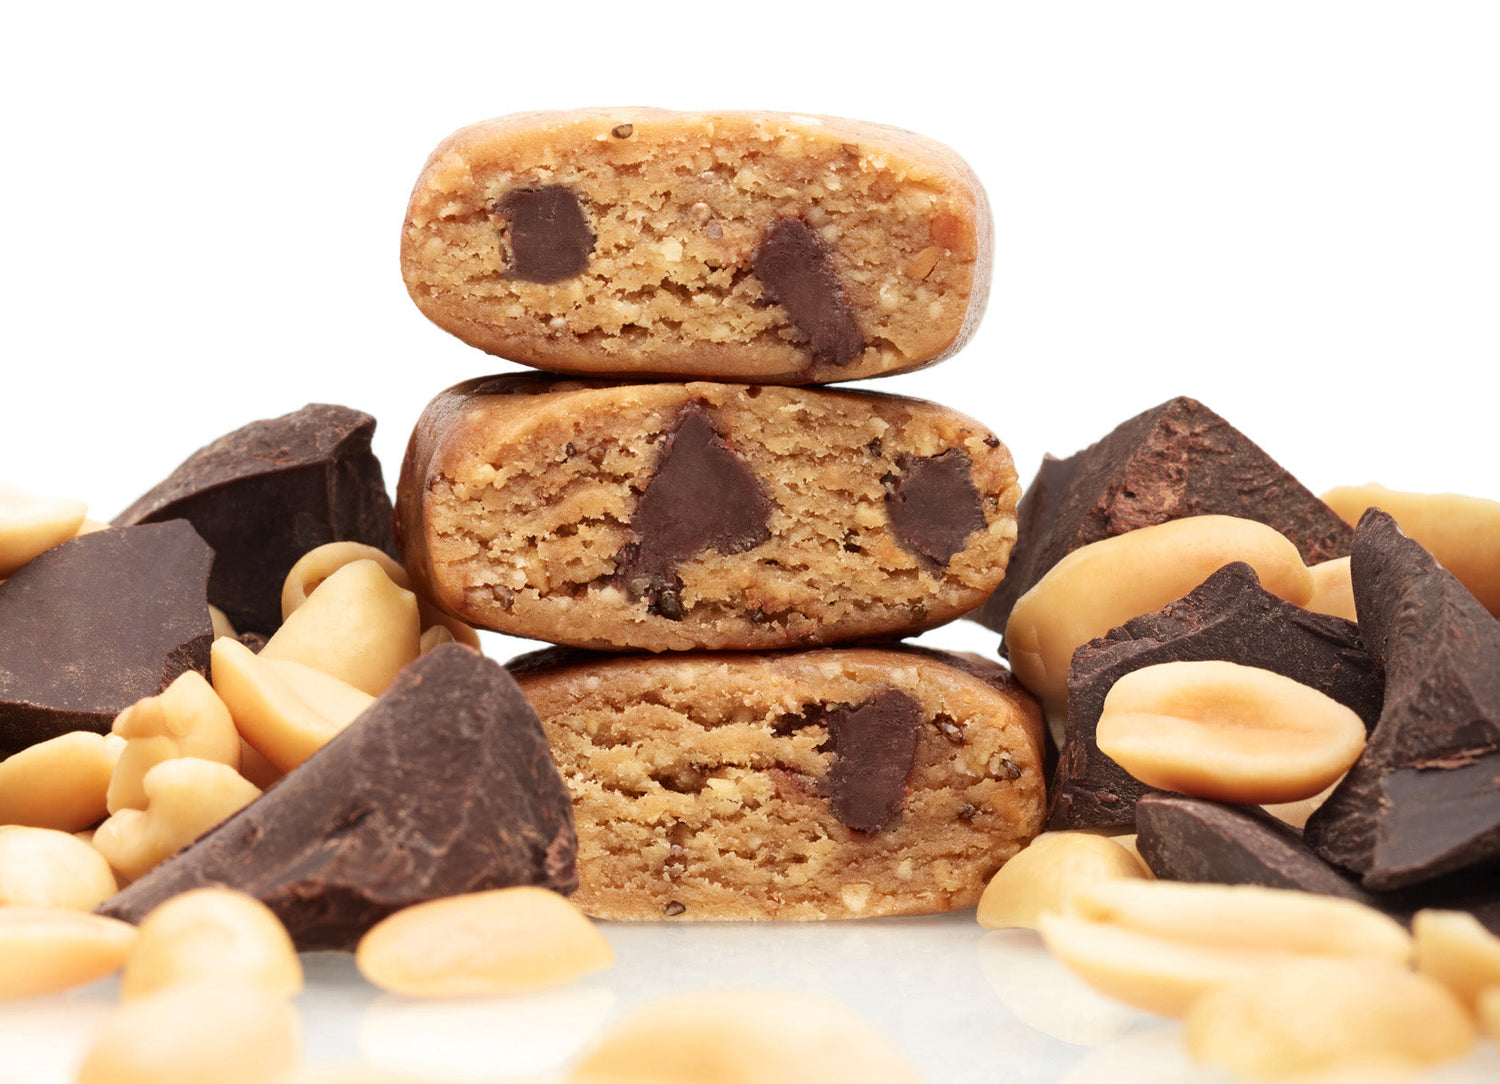 Peanut Butter Dark Chocolate & Sea Salt "New and Improved Glo" Vegan Protein Bars